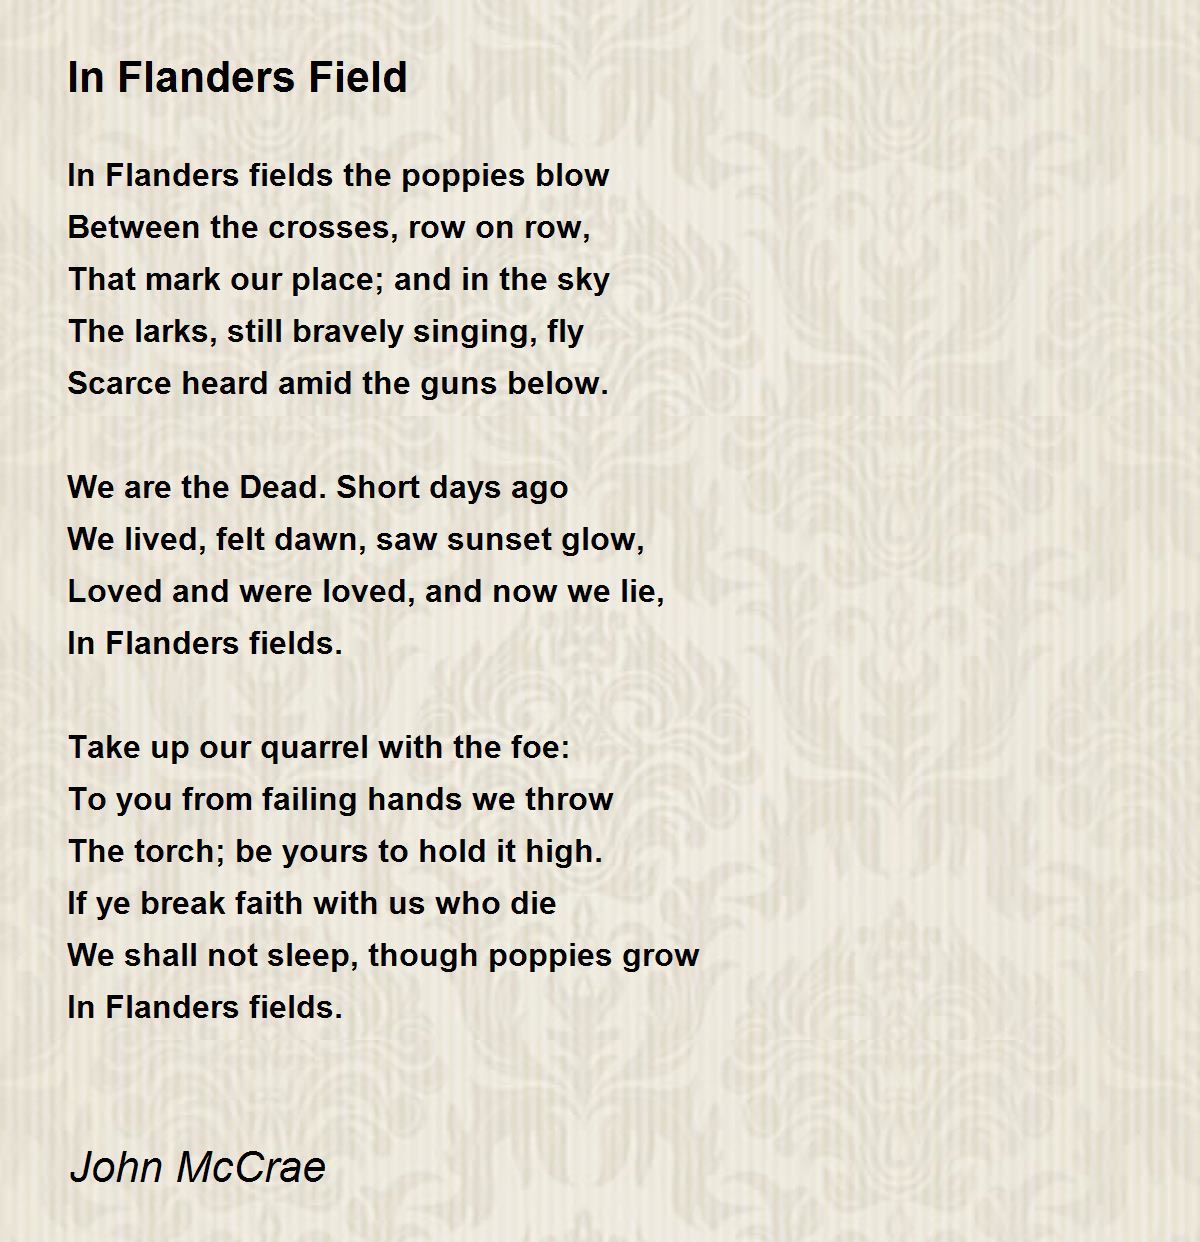 In Flanders Field - In Flanders Field Poem by John McCrae